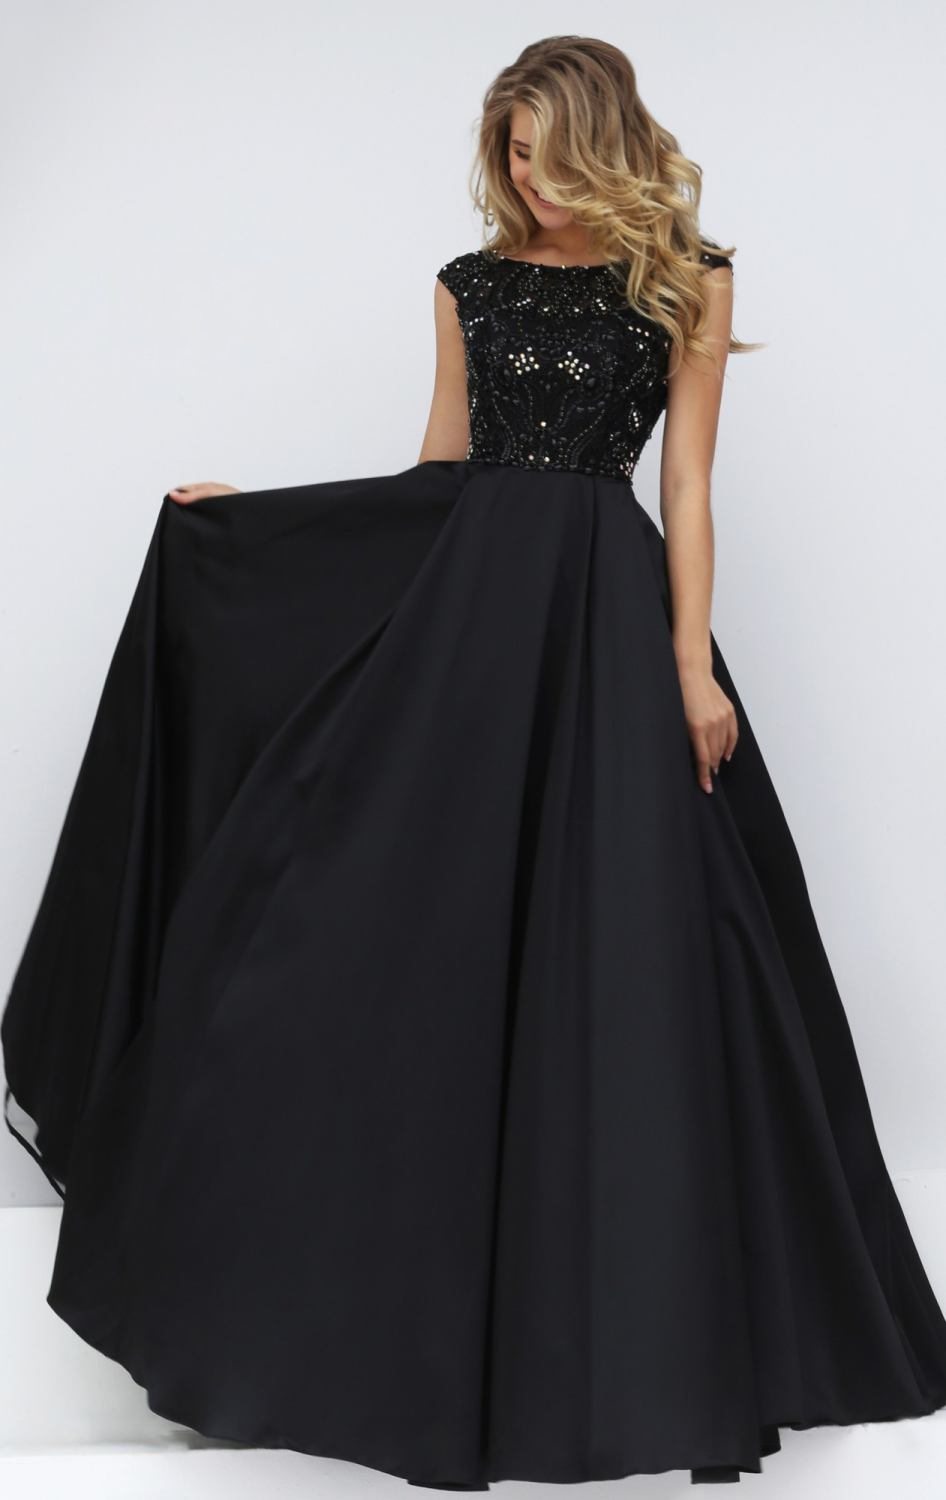 Sexy Black Prom Dress, Beading Prom Dress,2016 Prom Dress, Cap Sleeve